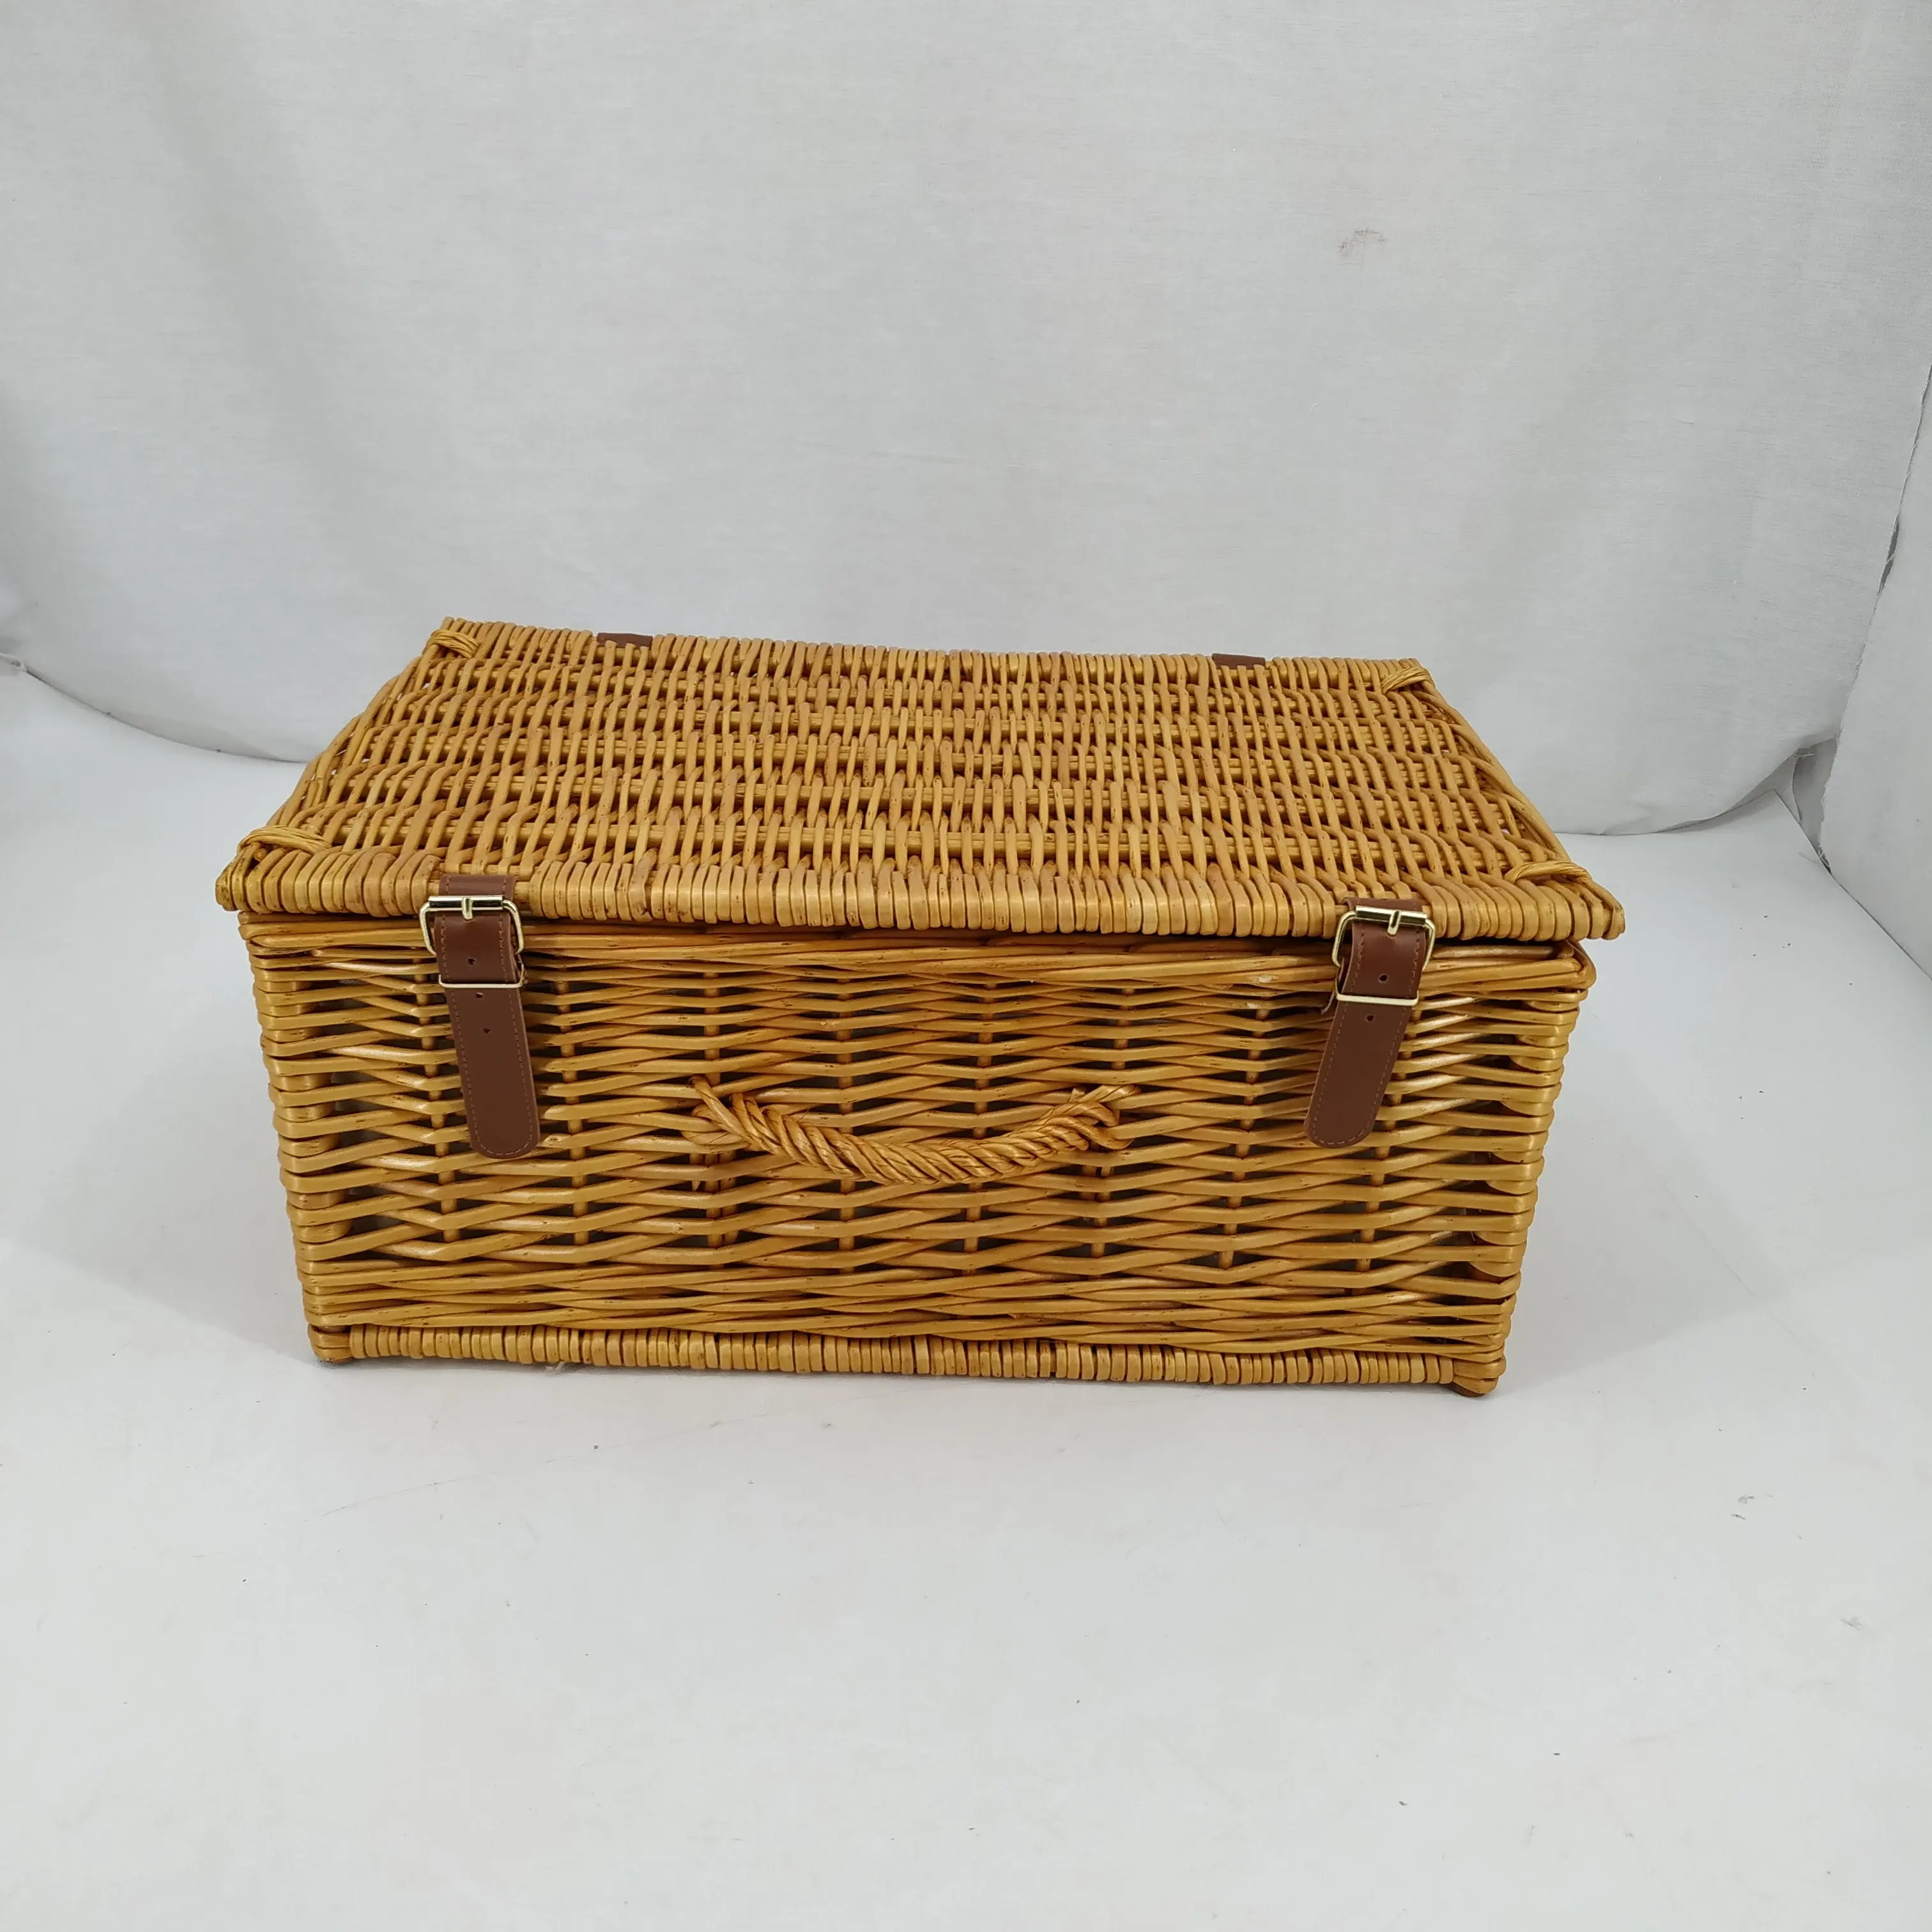 
100% handmade natural wicker 4 person picnic basket picnic sets rattan picnic basket 